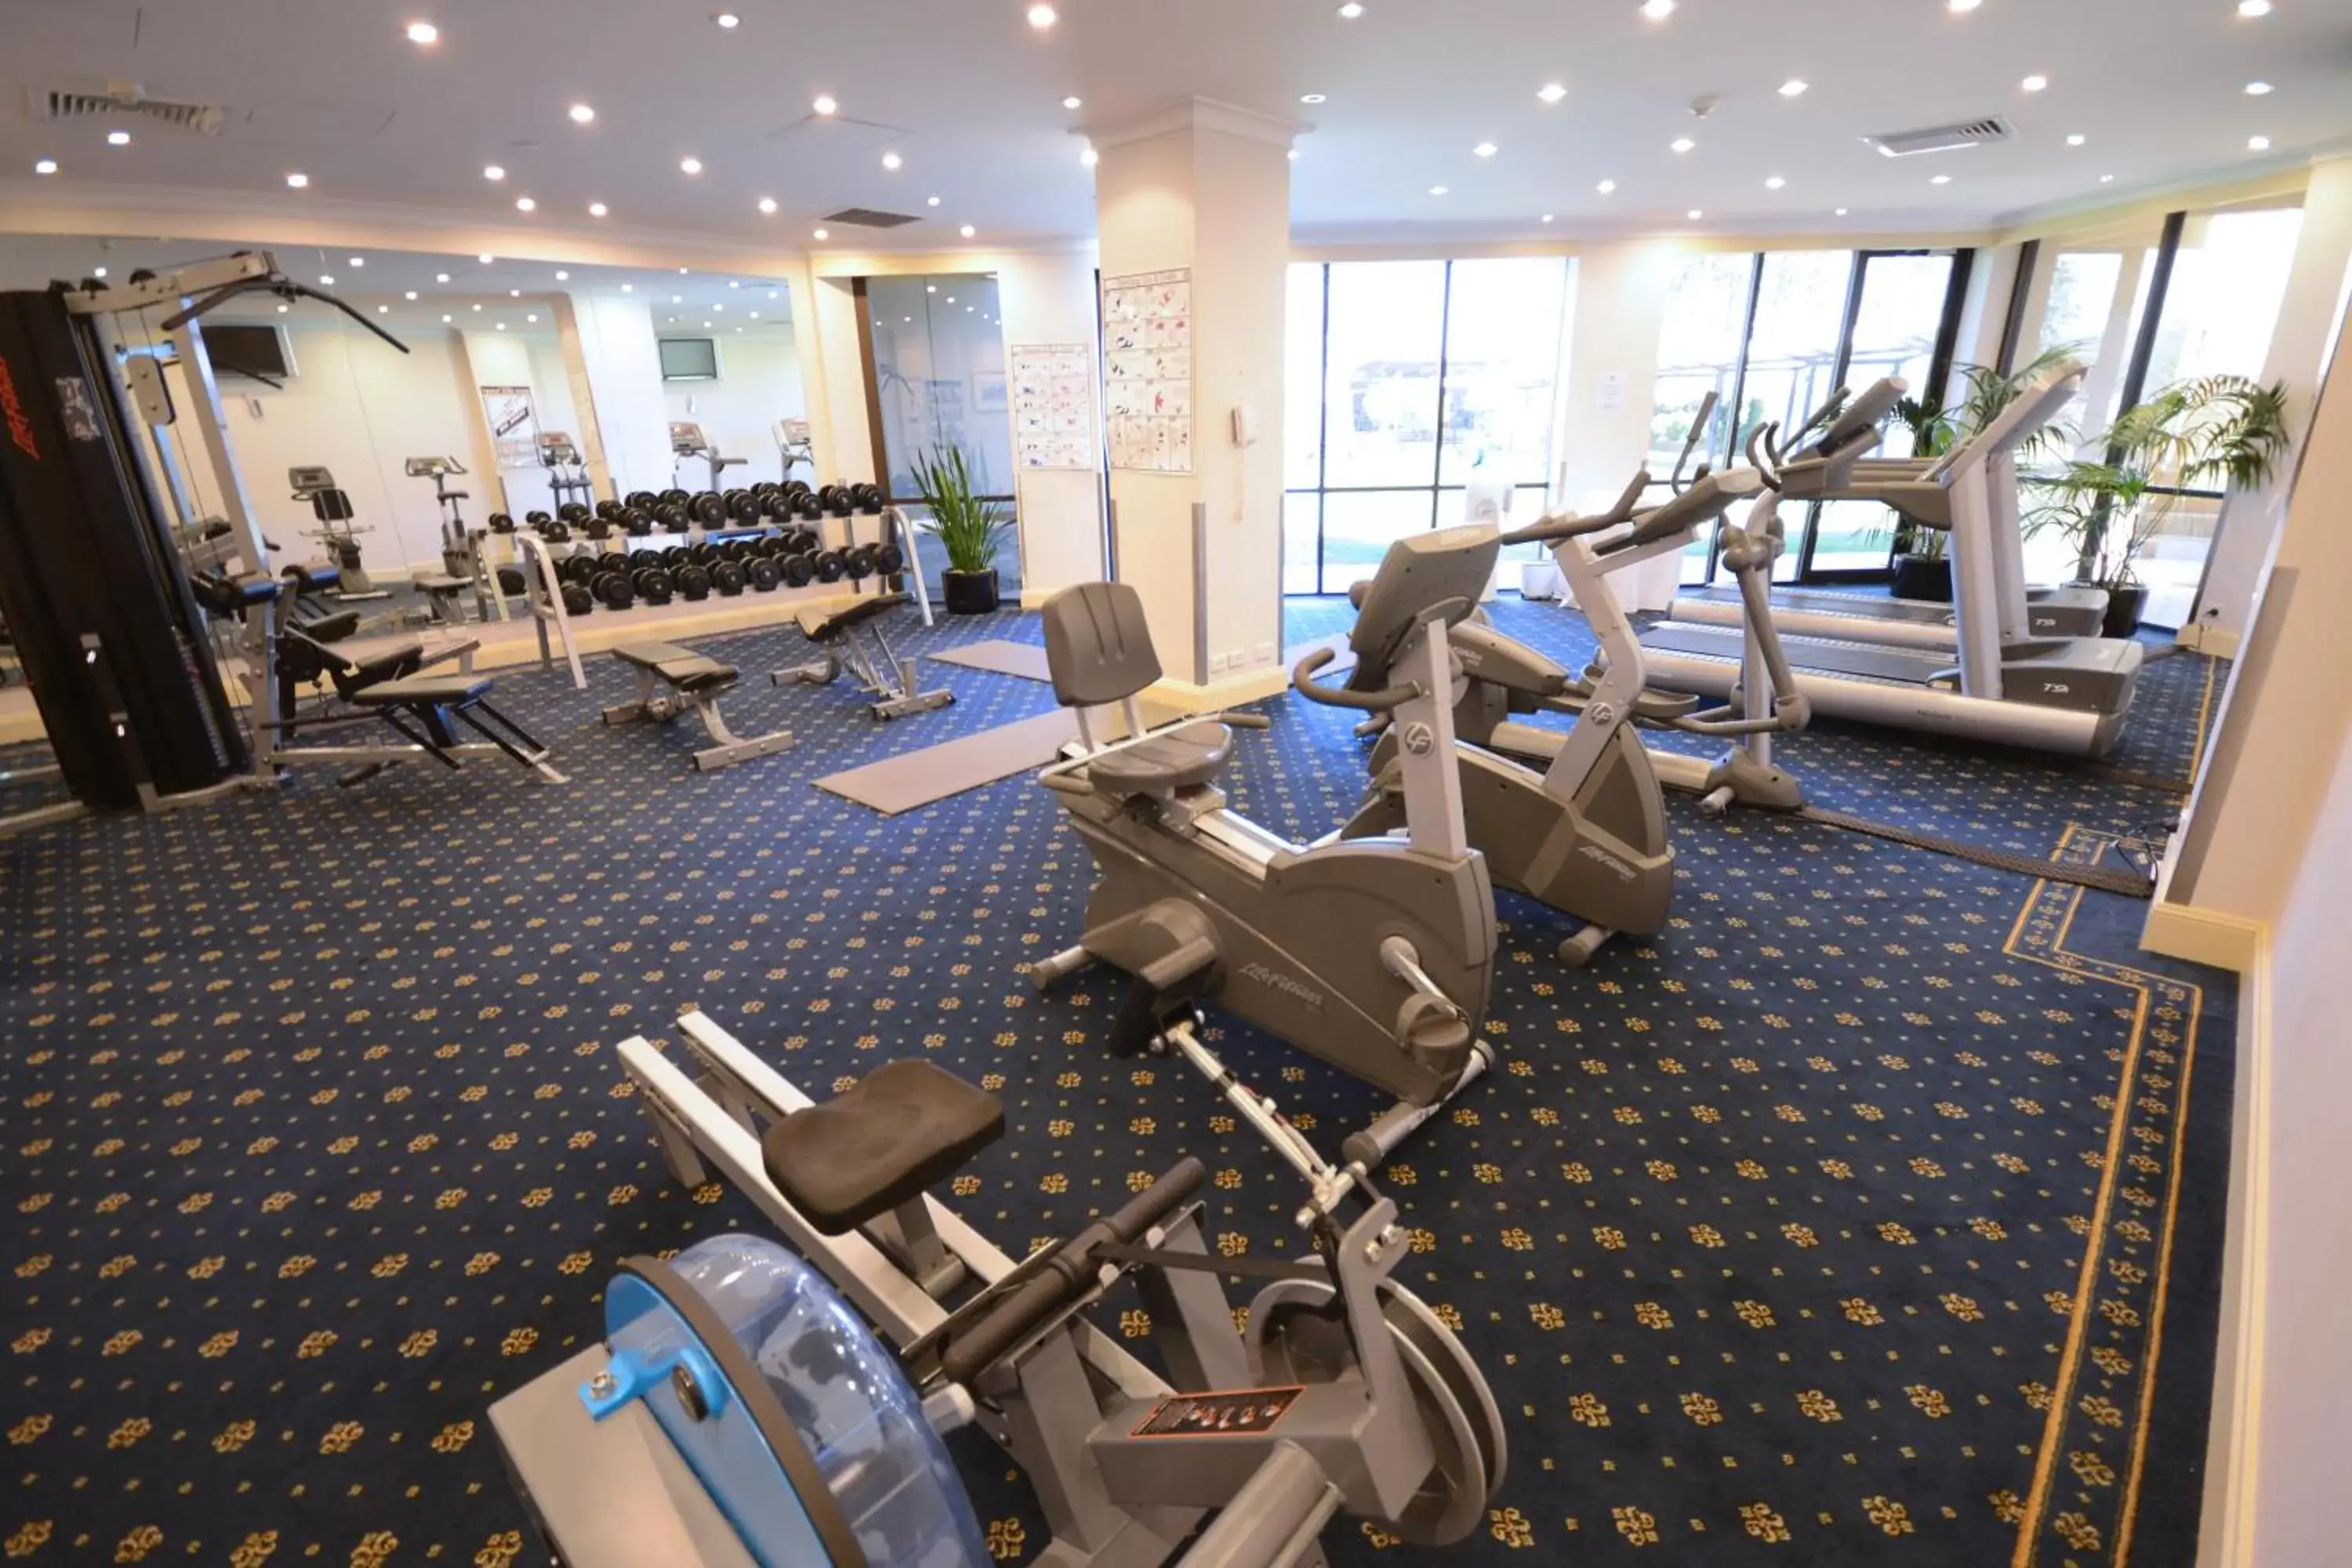 Fitness centre/facilities, Fitness Center/Facilities in Mercure Penrith